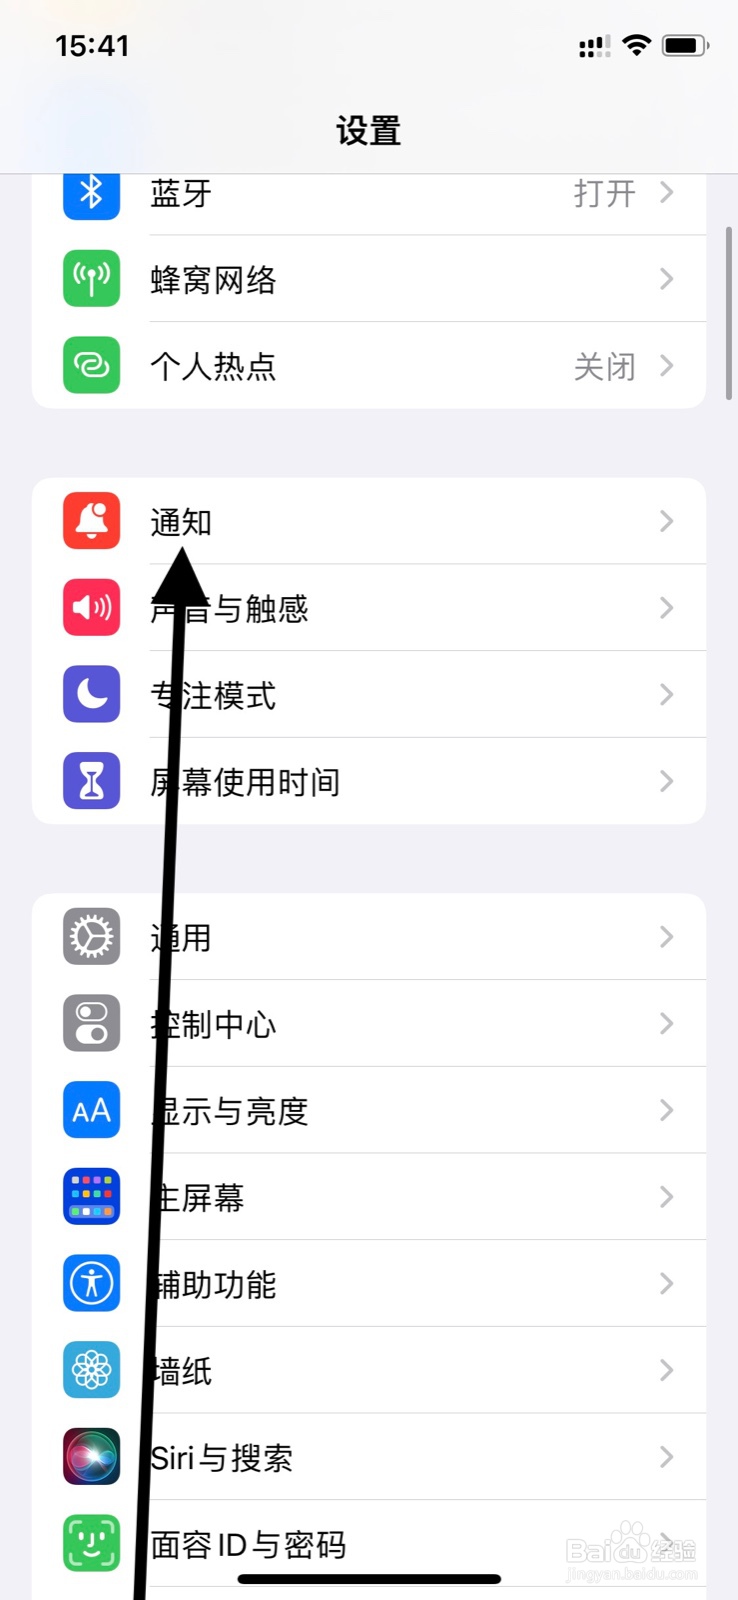 <b>iPhone通知中心允许“欢乐斗地主”app显示通知</b>